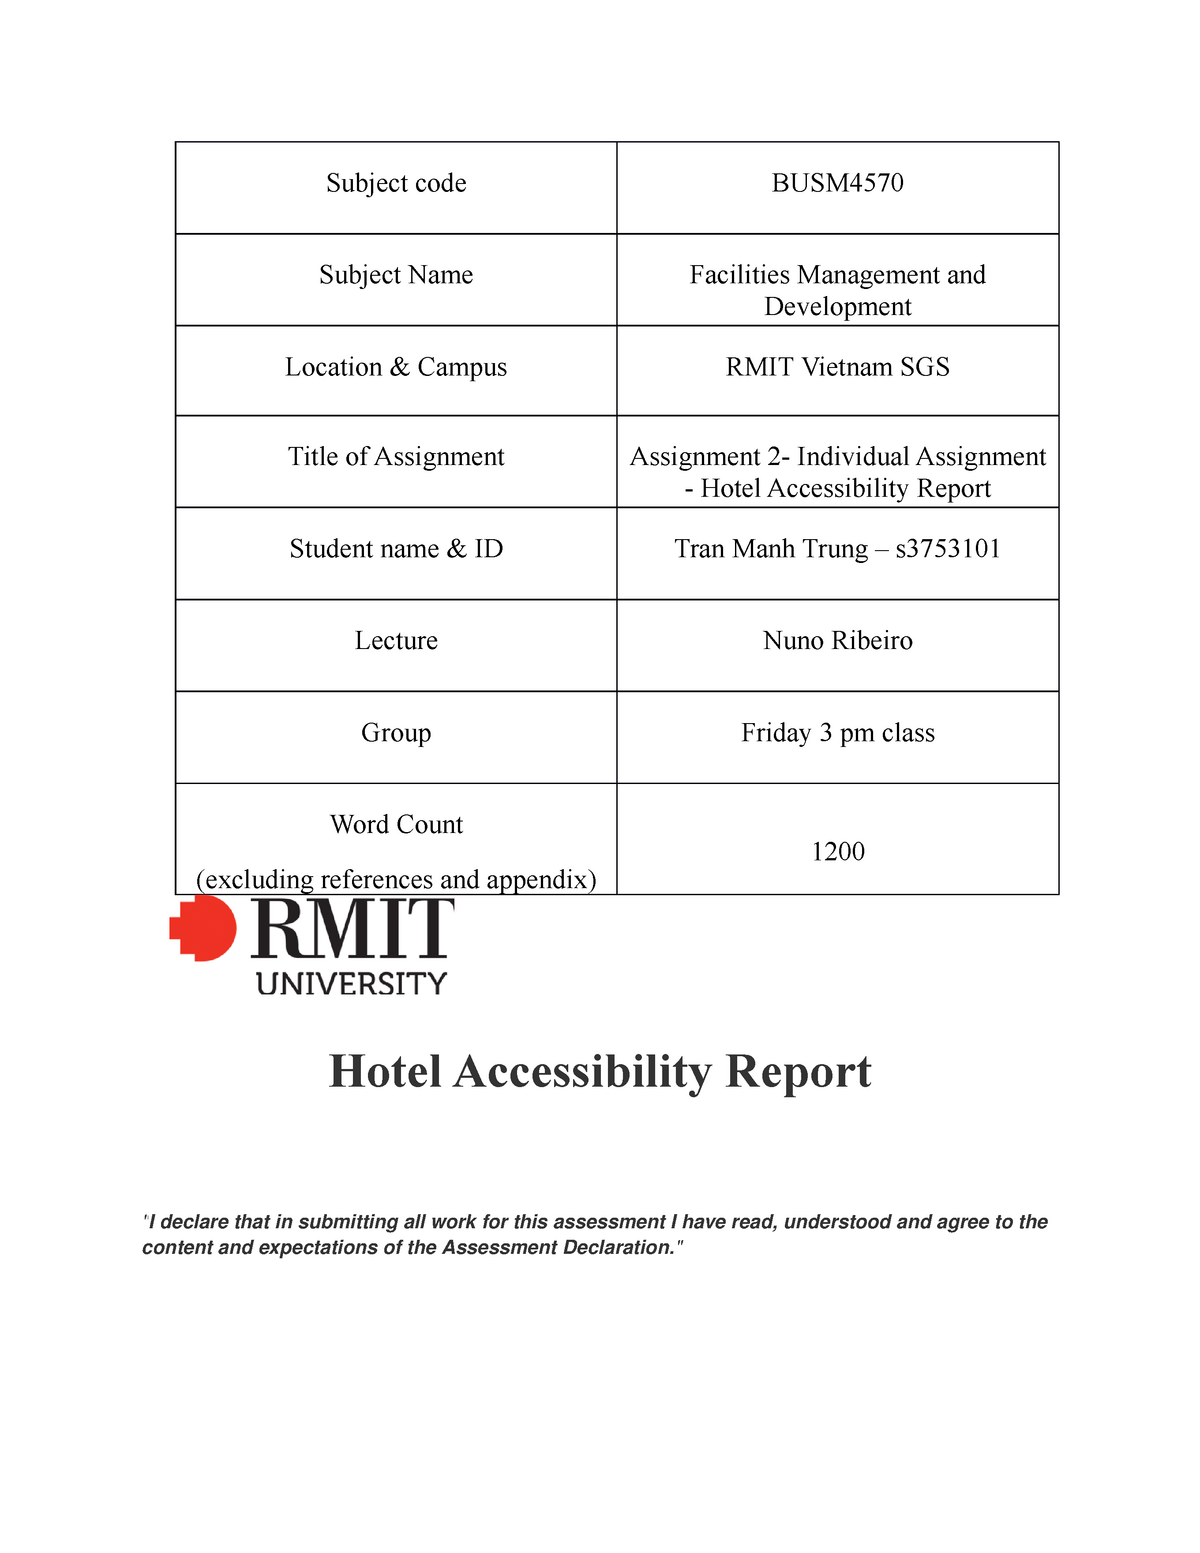 hotel-report-facilities-management-econ2160-studocu